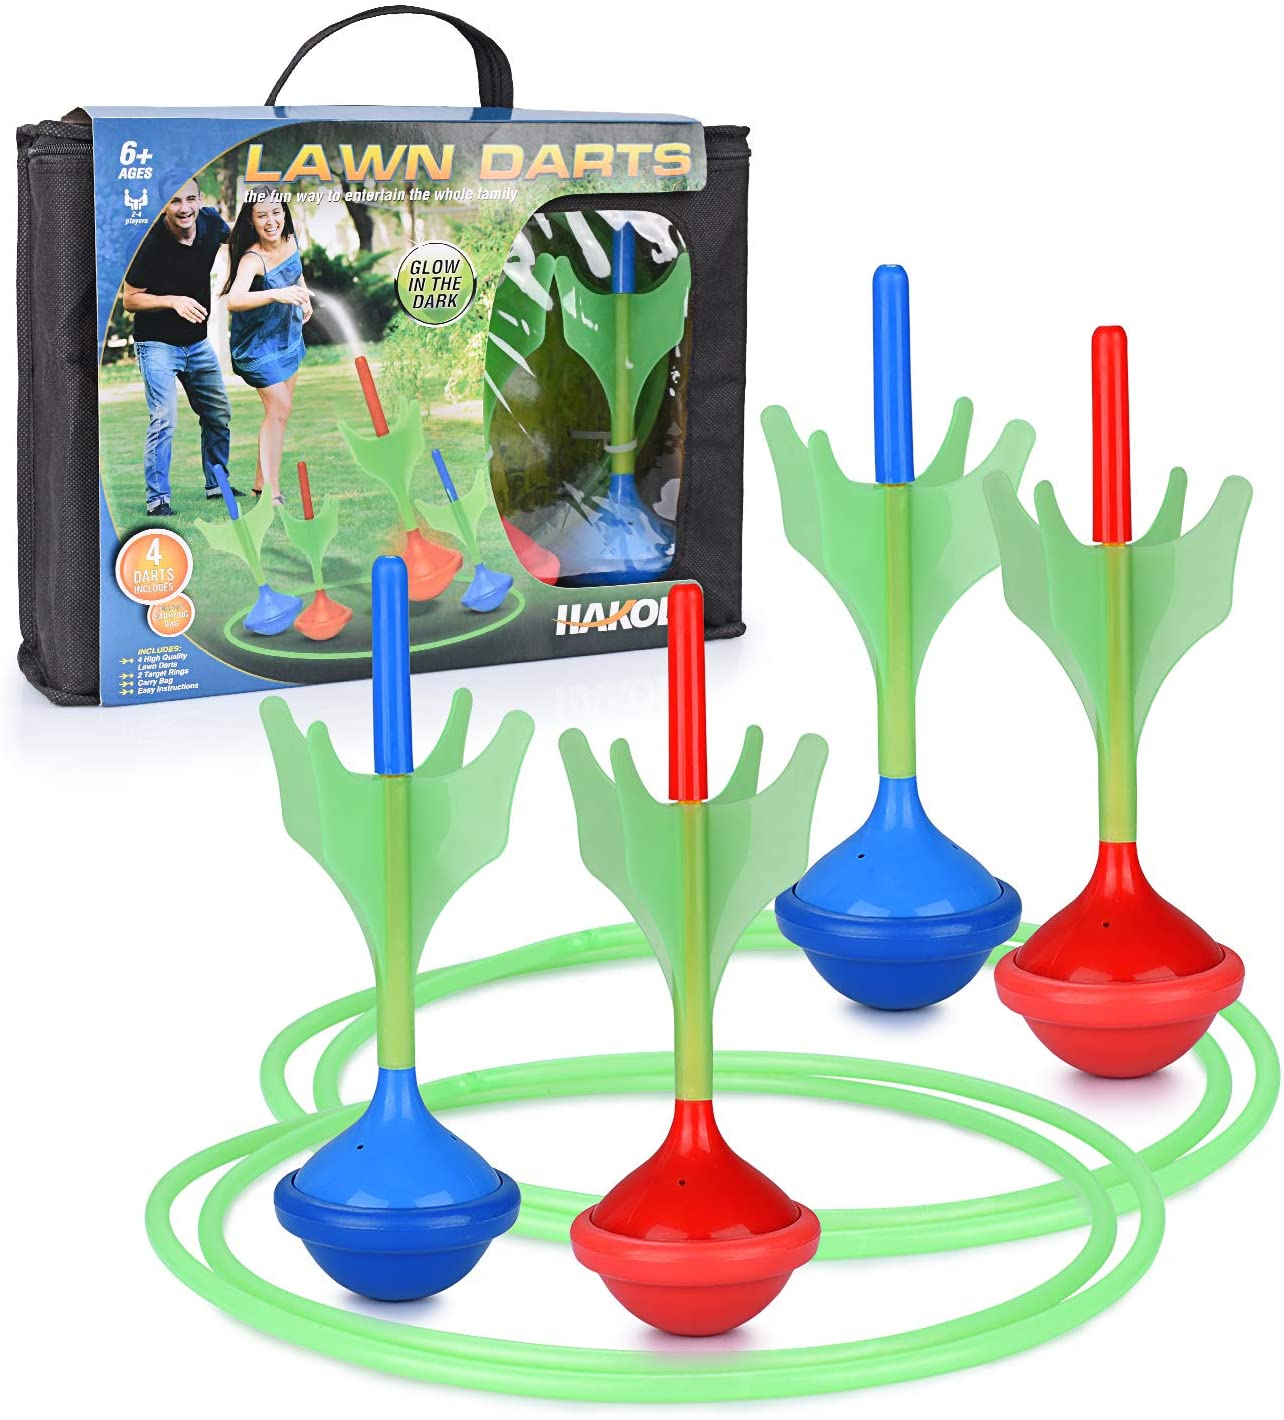 HAKOL Plastic Glow-In-The-Dark Lawn Darts For Kids